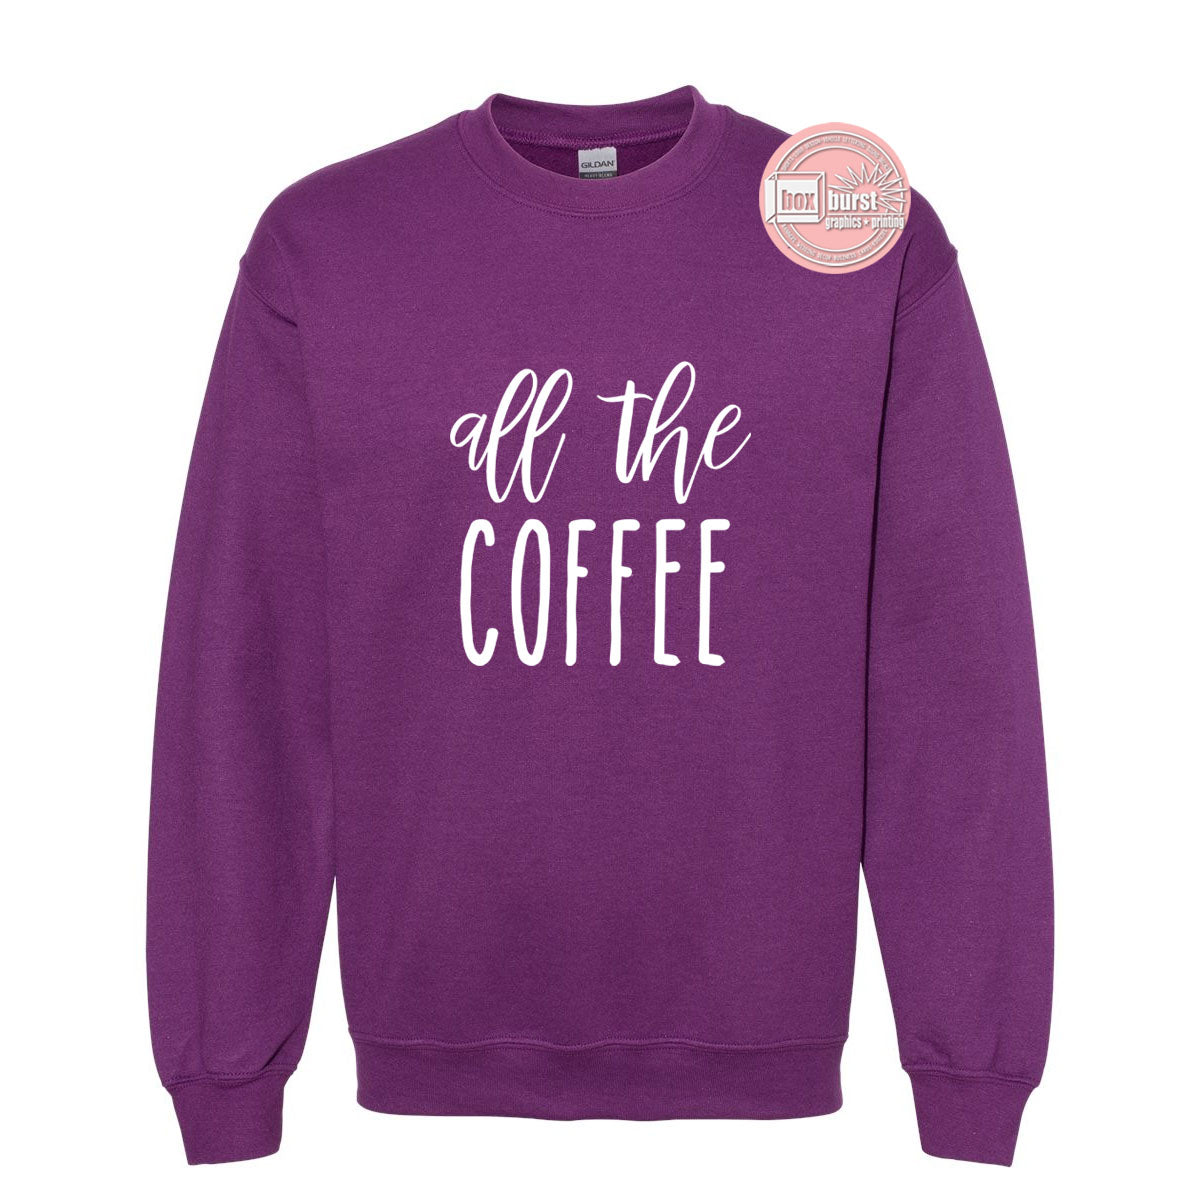 All the coffee unisex fleece lined sweater